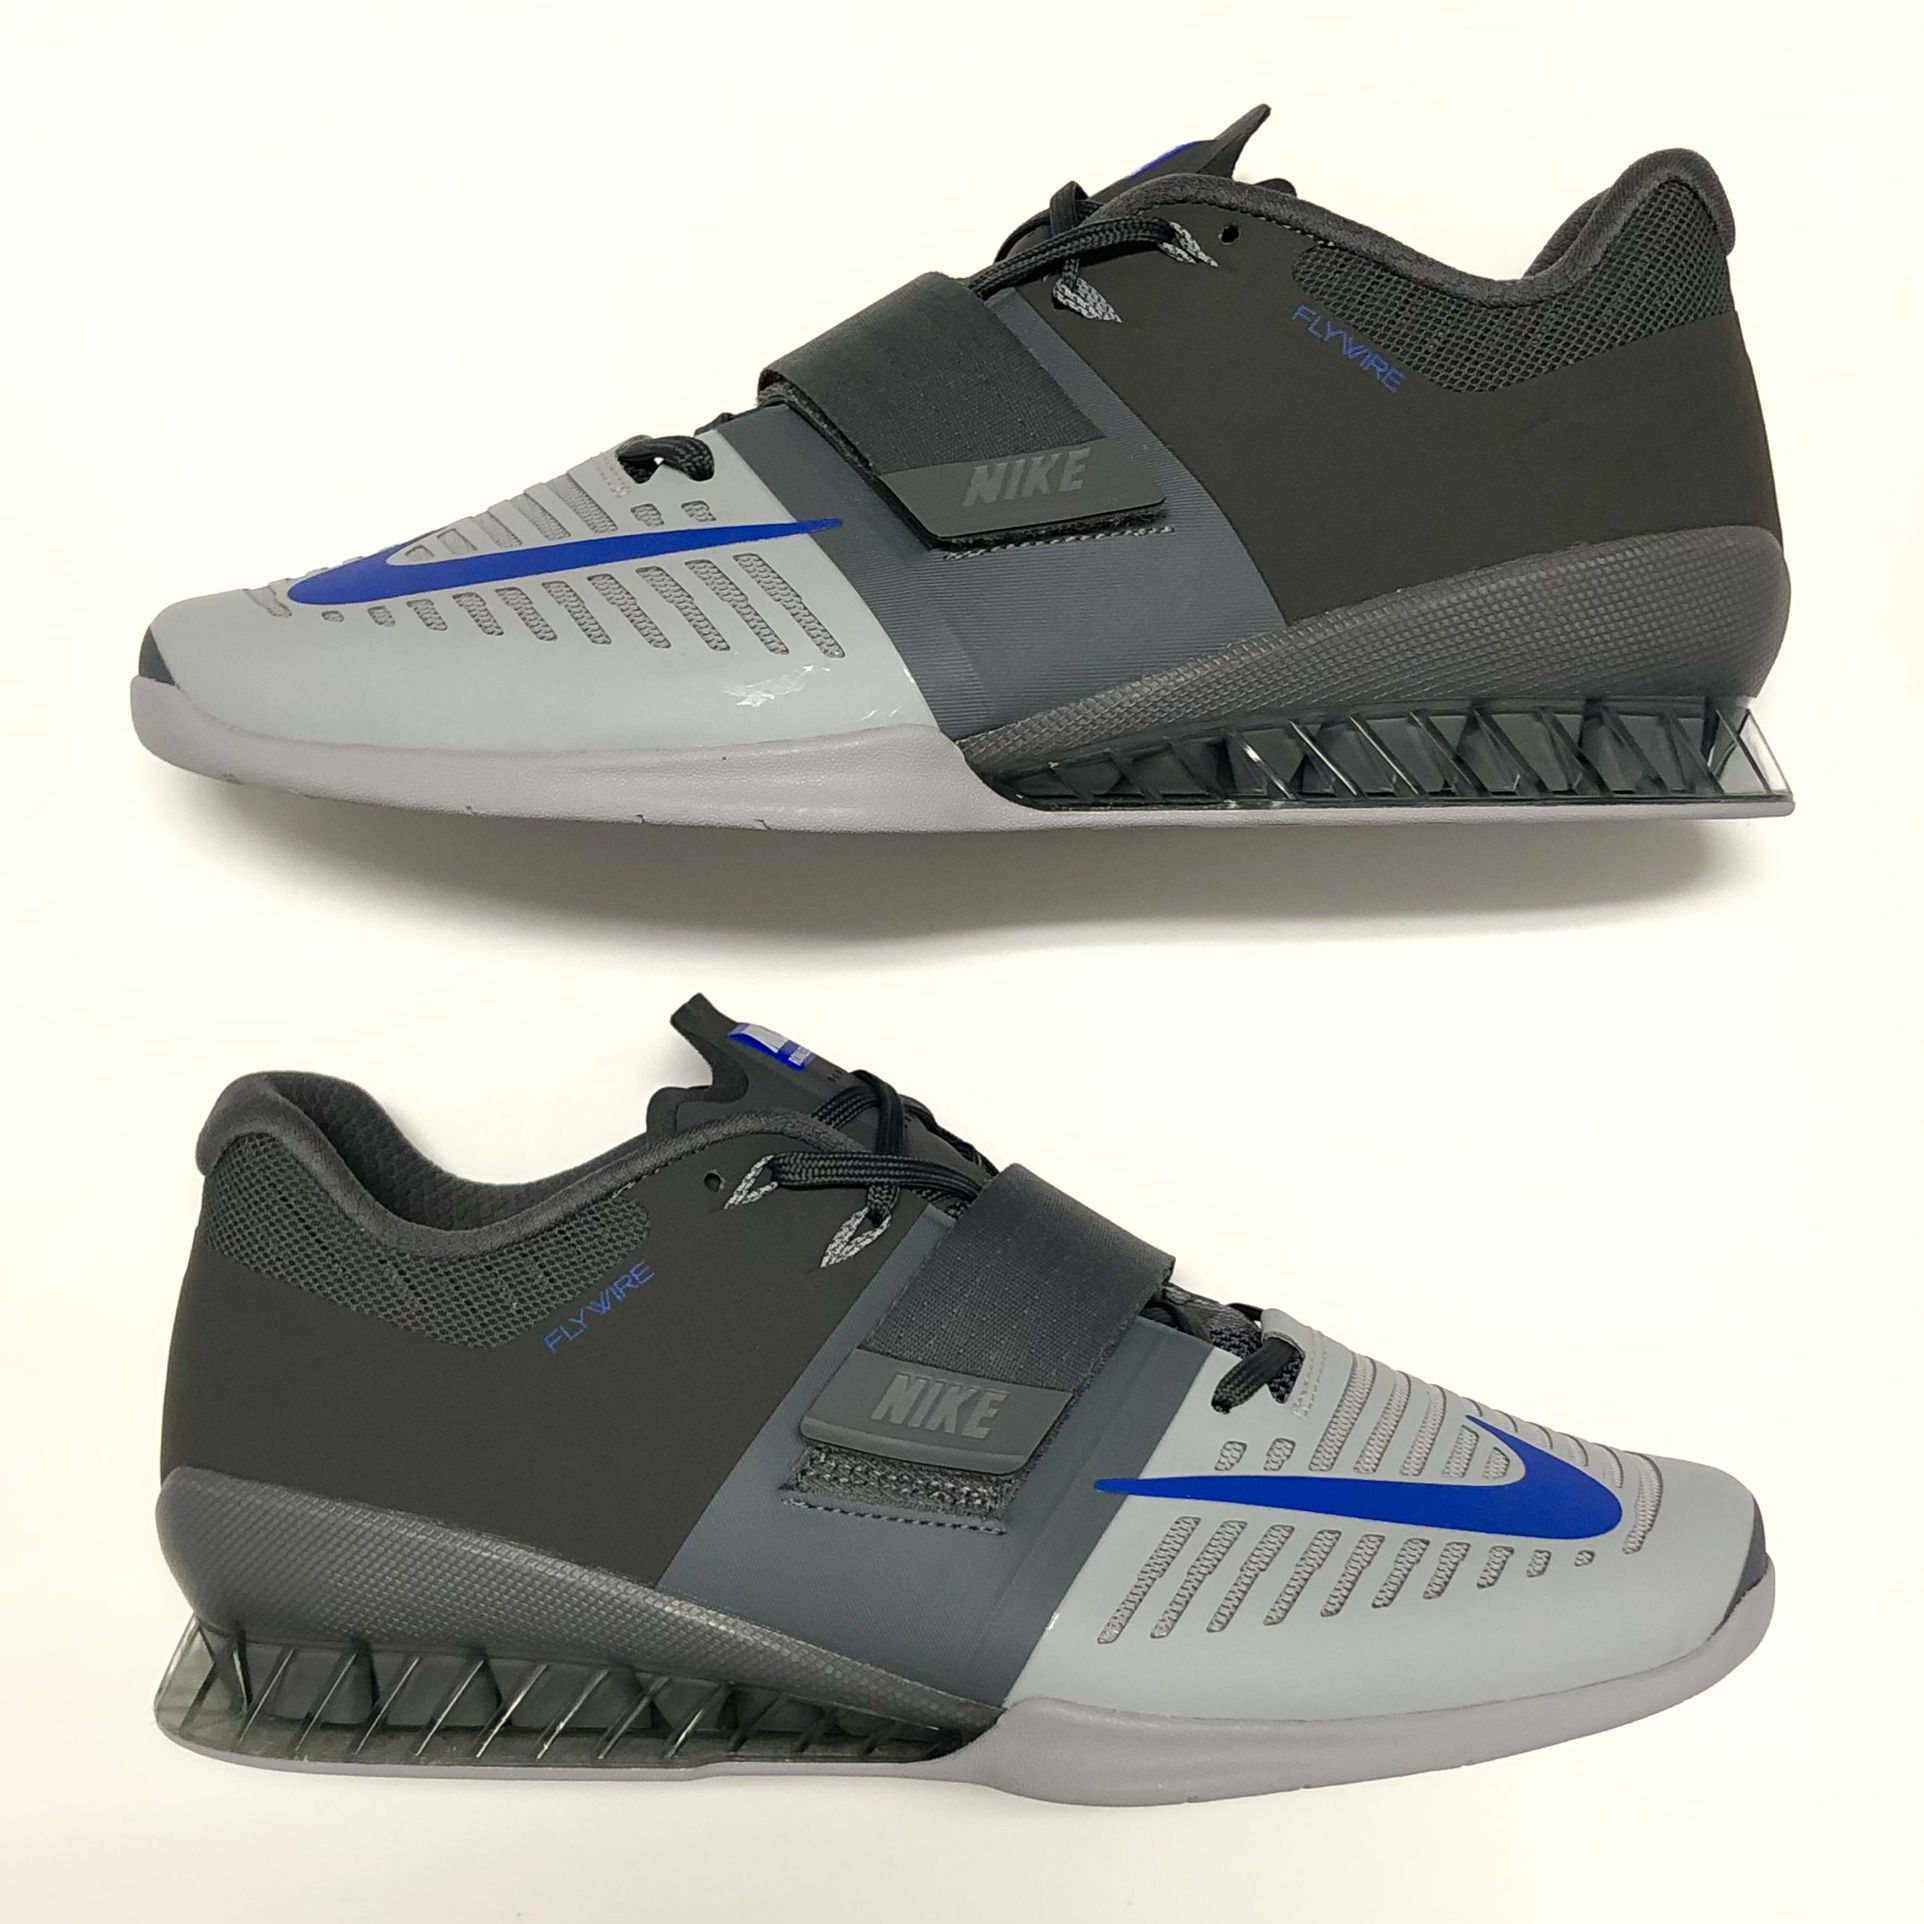 Nike Romaleos 3 Weightlifting Training Shoes - 'Grey Blue' (852933-001) SIZE 13